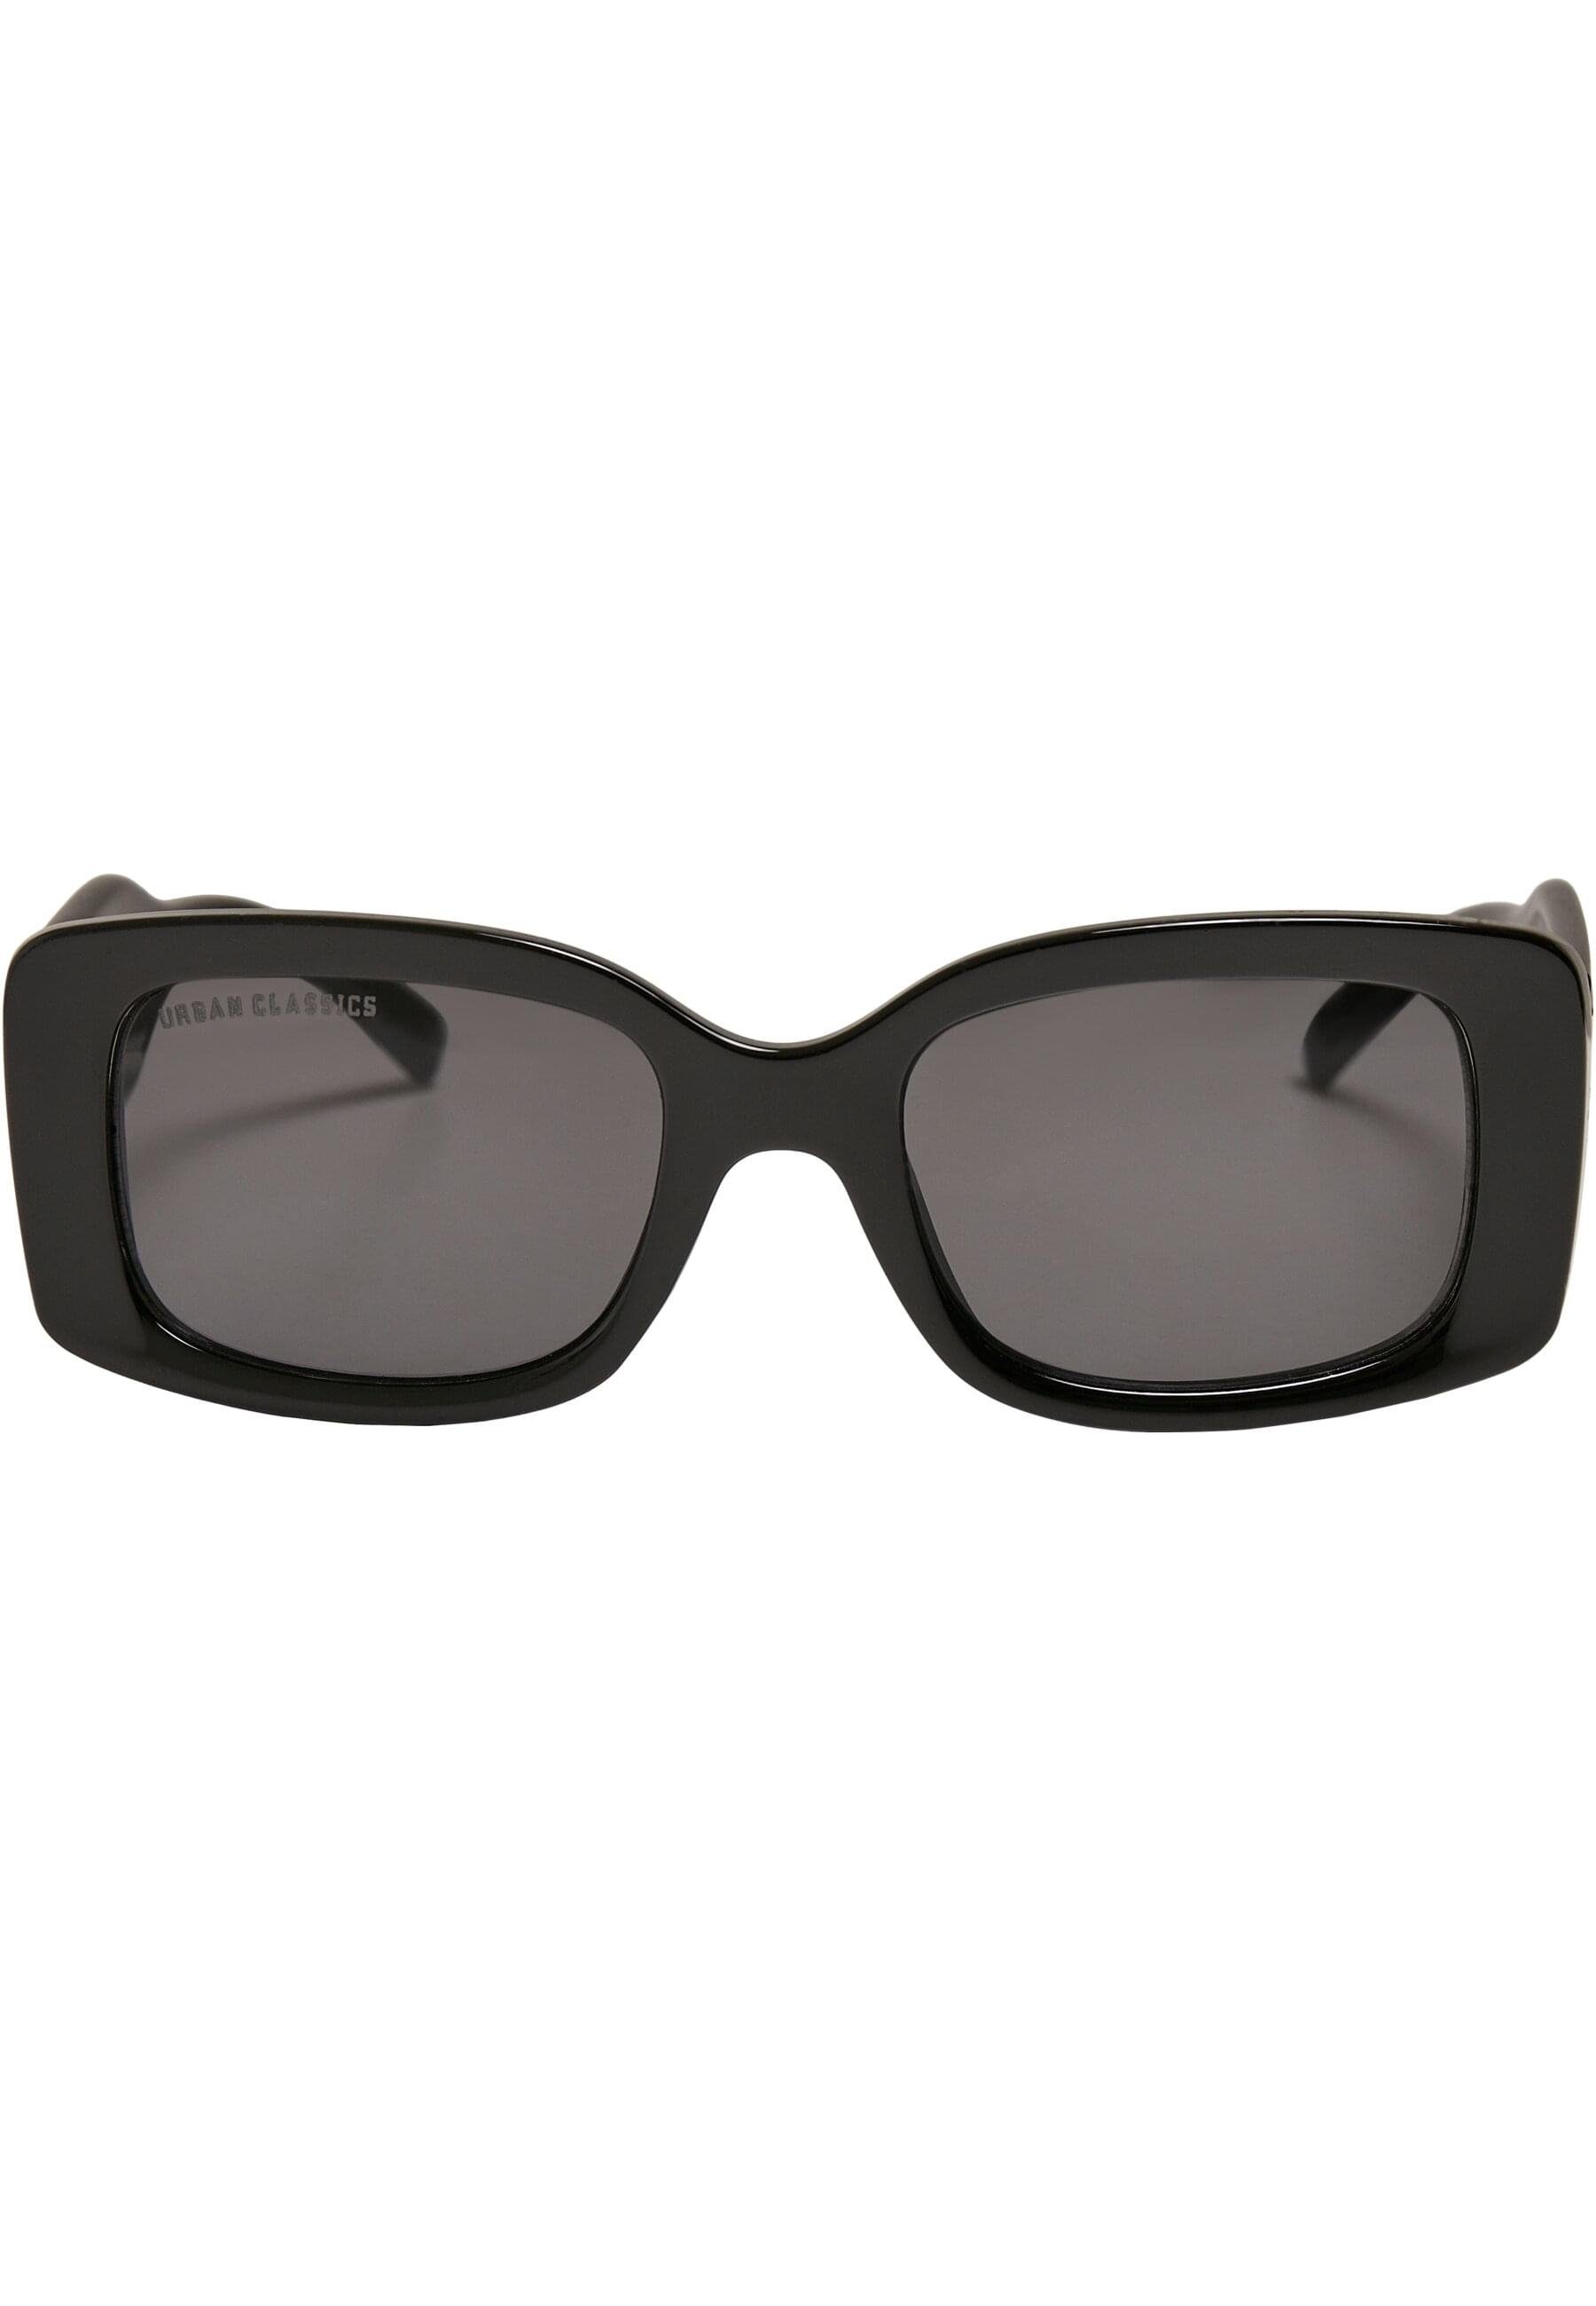 Unisex CLASSICS URBAN Sunglasses Hawai Sonnenbrille